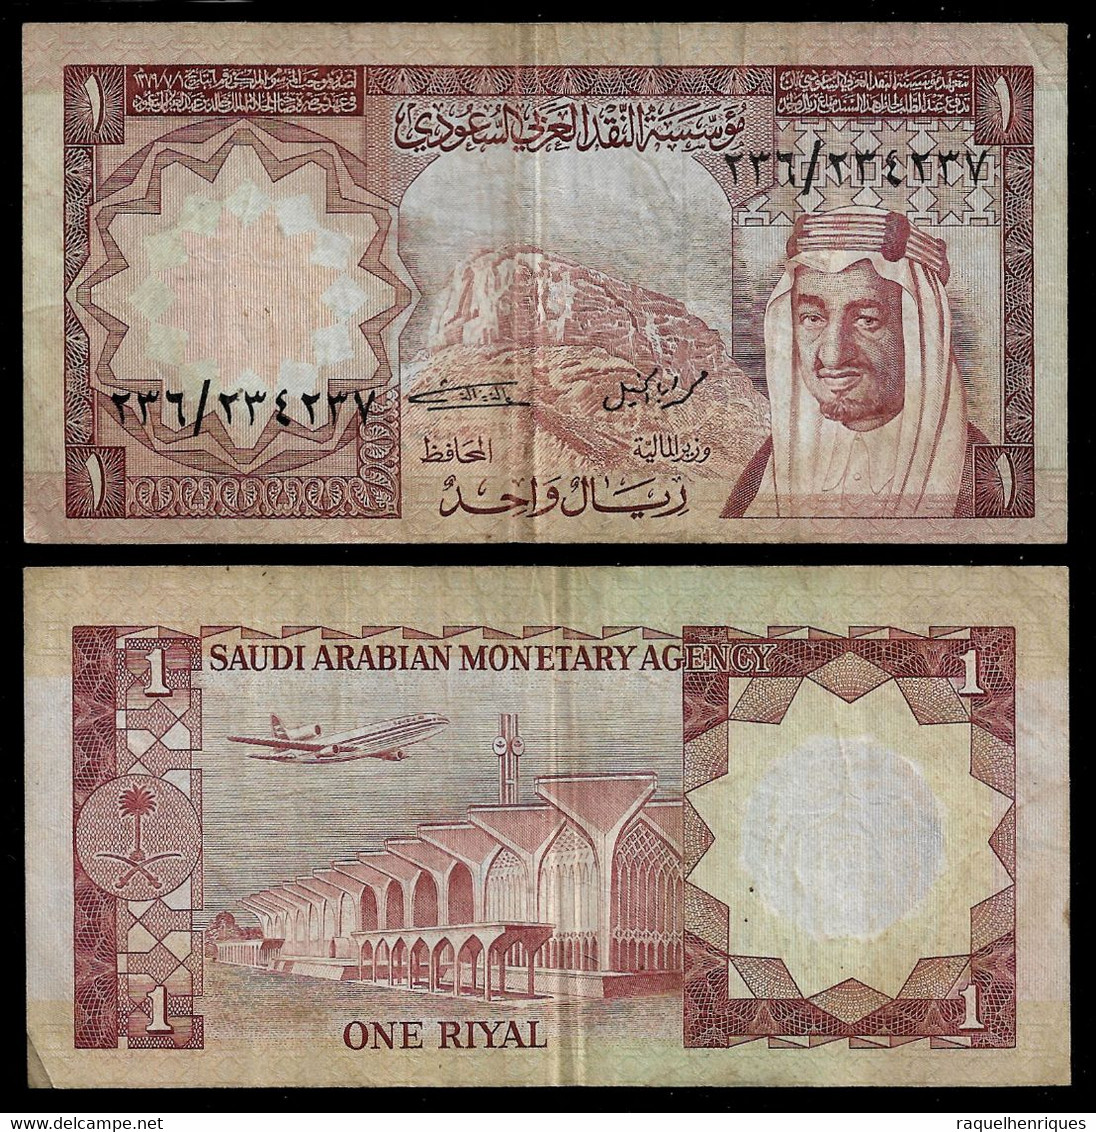 SAUDI ARABIA BANKNOTE - 1 RIYAL (1977) P#16 F/VF (NT#03) - Saudi Arabia